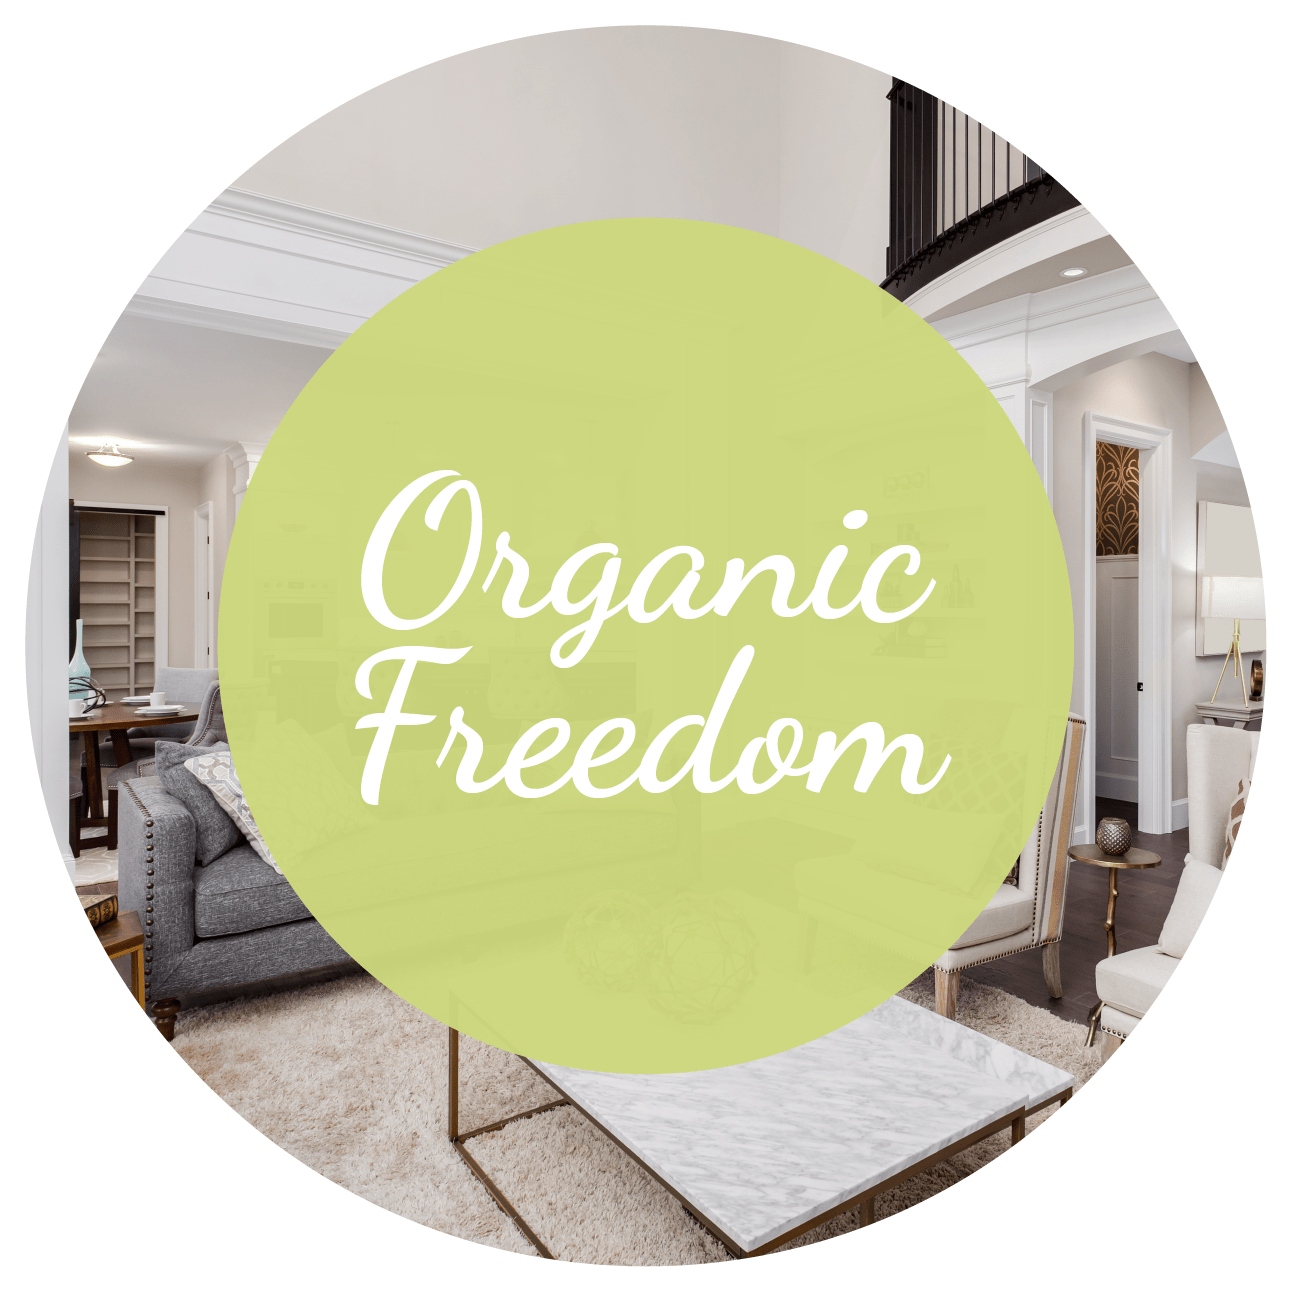 Organic Freedom simple organizing strategies